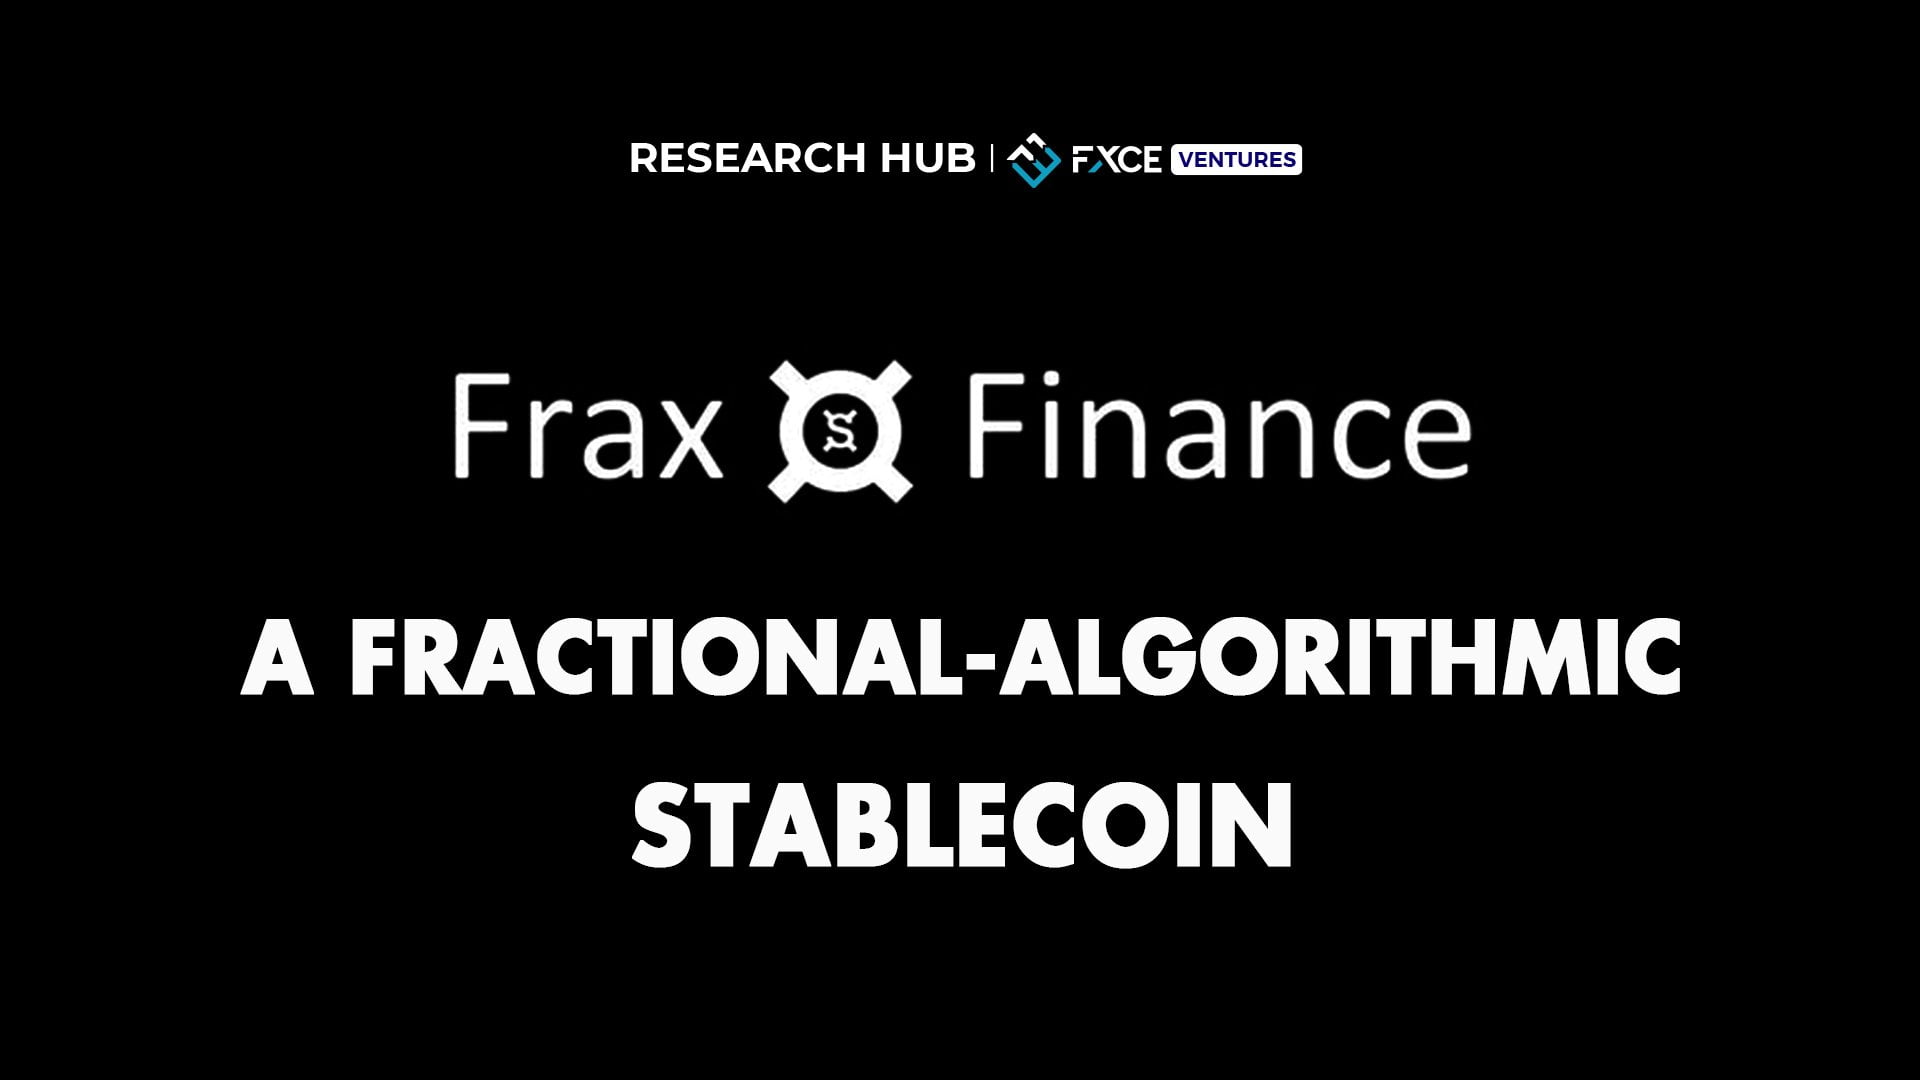 FRAX: A Fractional-Algorithmic Stablecoin